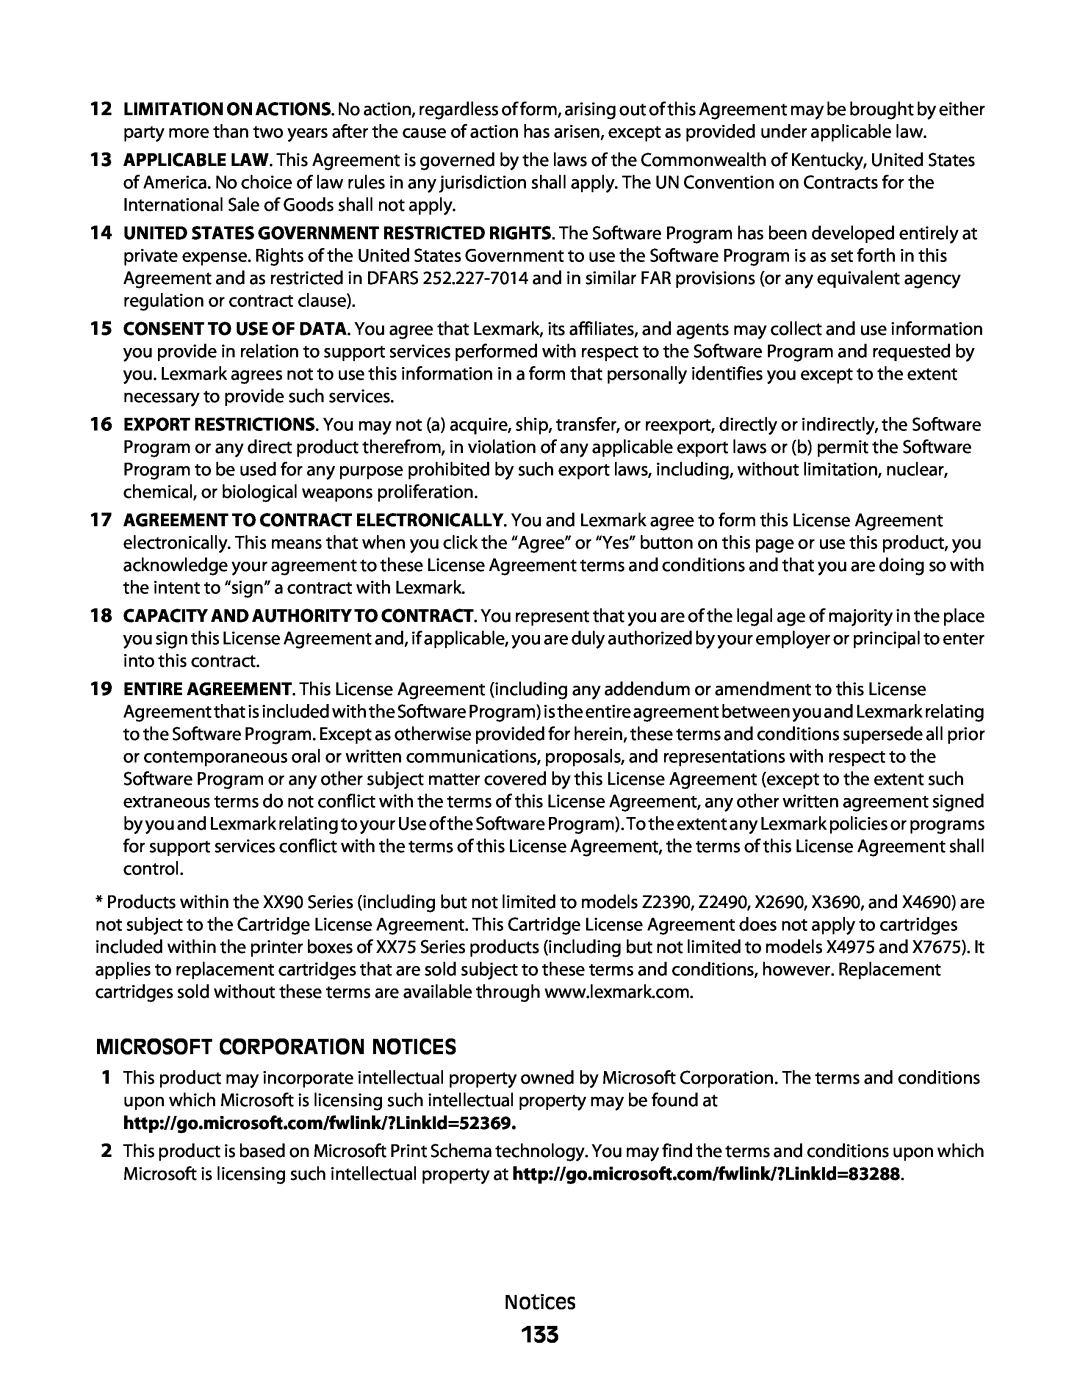 Lexmark 10E, 101 manual Microsoft Corporation Notices 